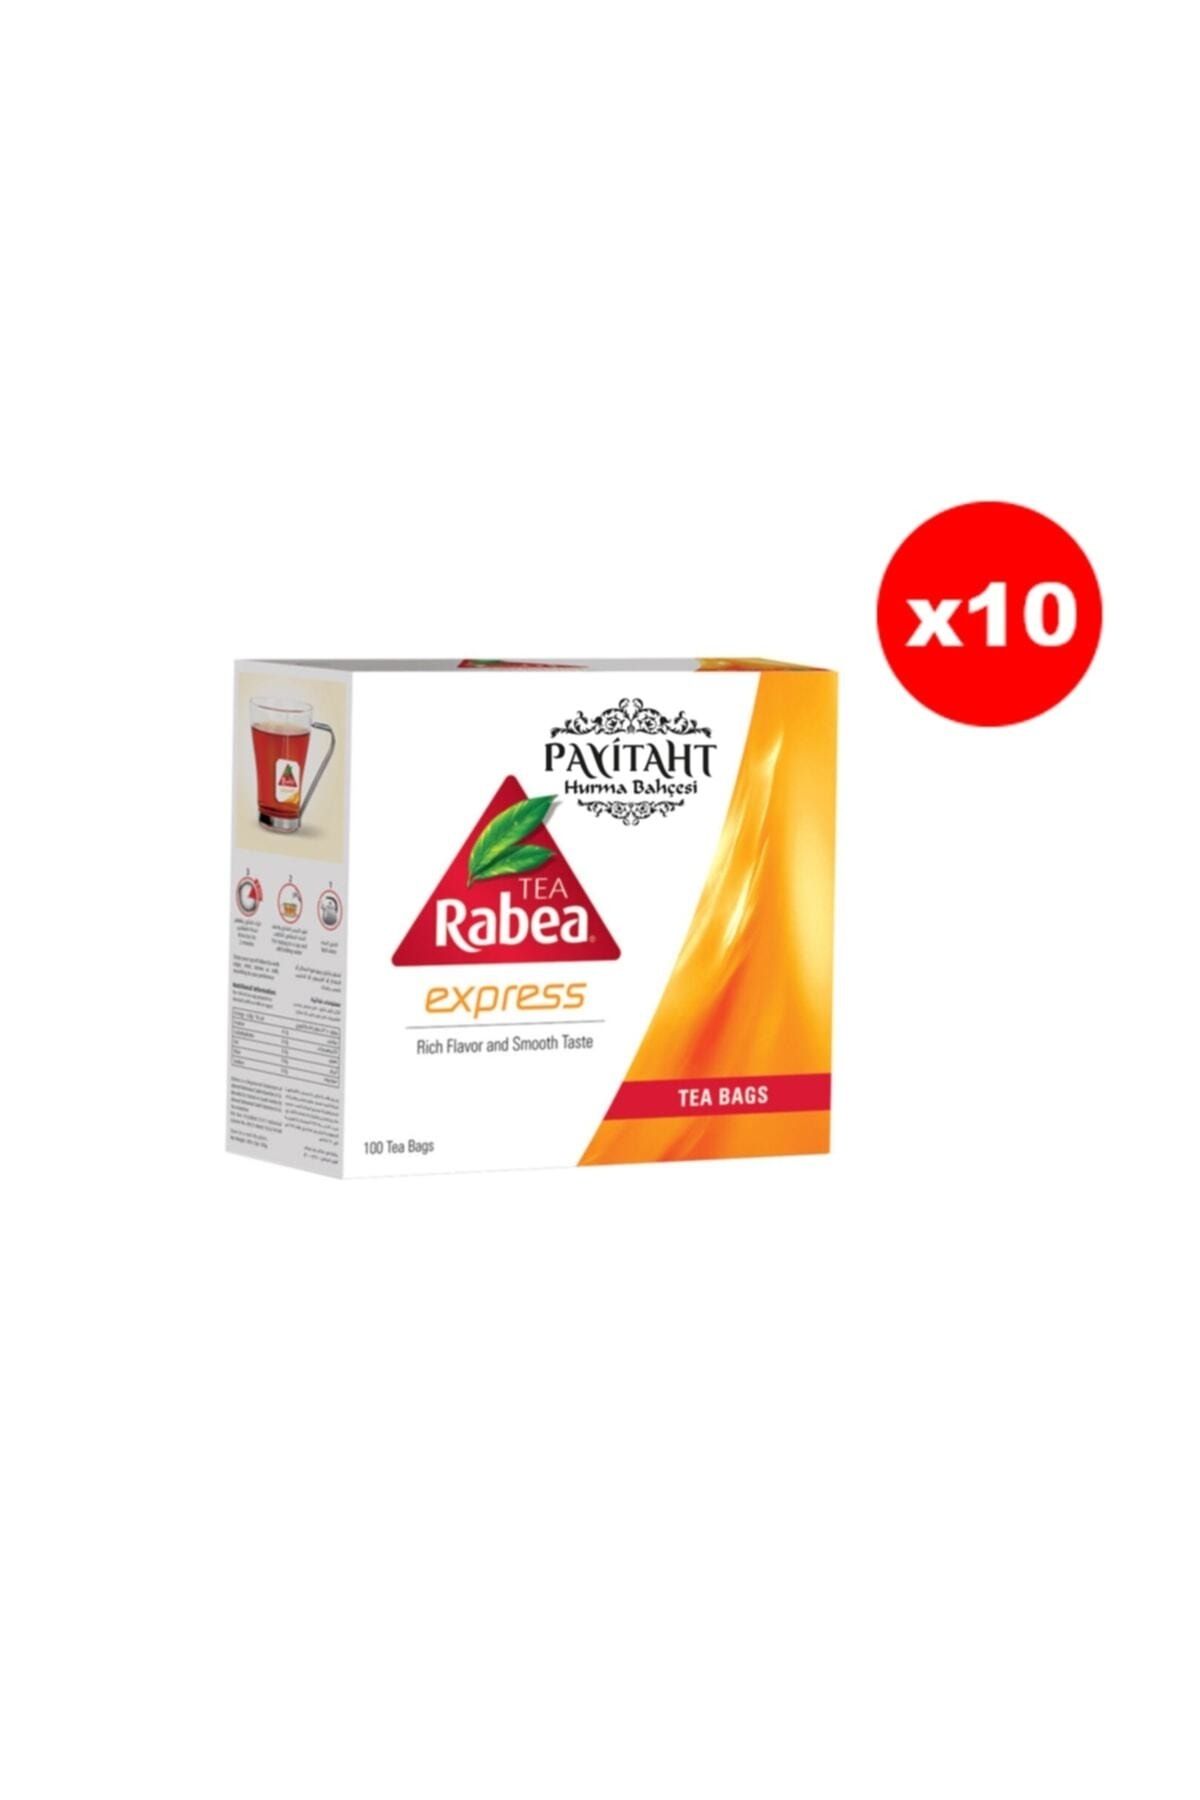 payitaht hurma Rabea Tea - Express Yumuşak Içimli Zengin Aromalı Siyah Çay 100 Poşet 10x Paket